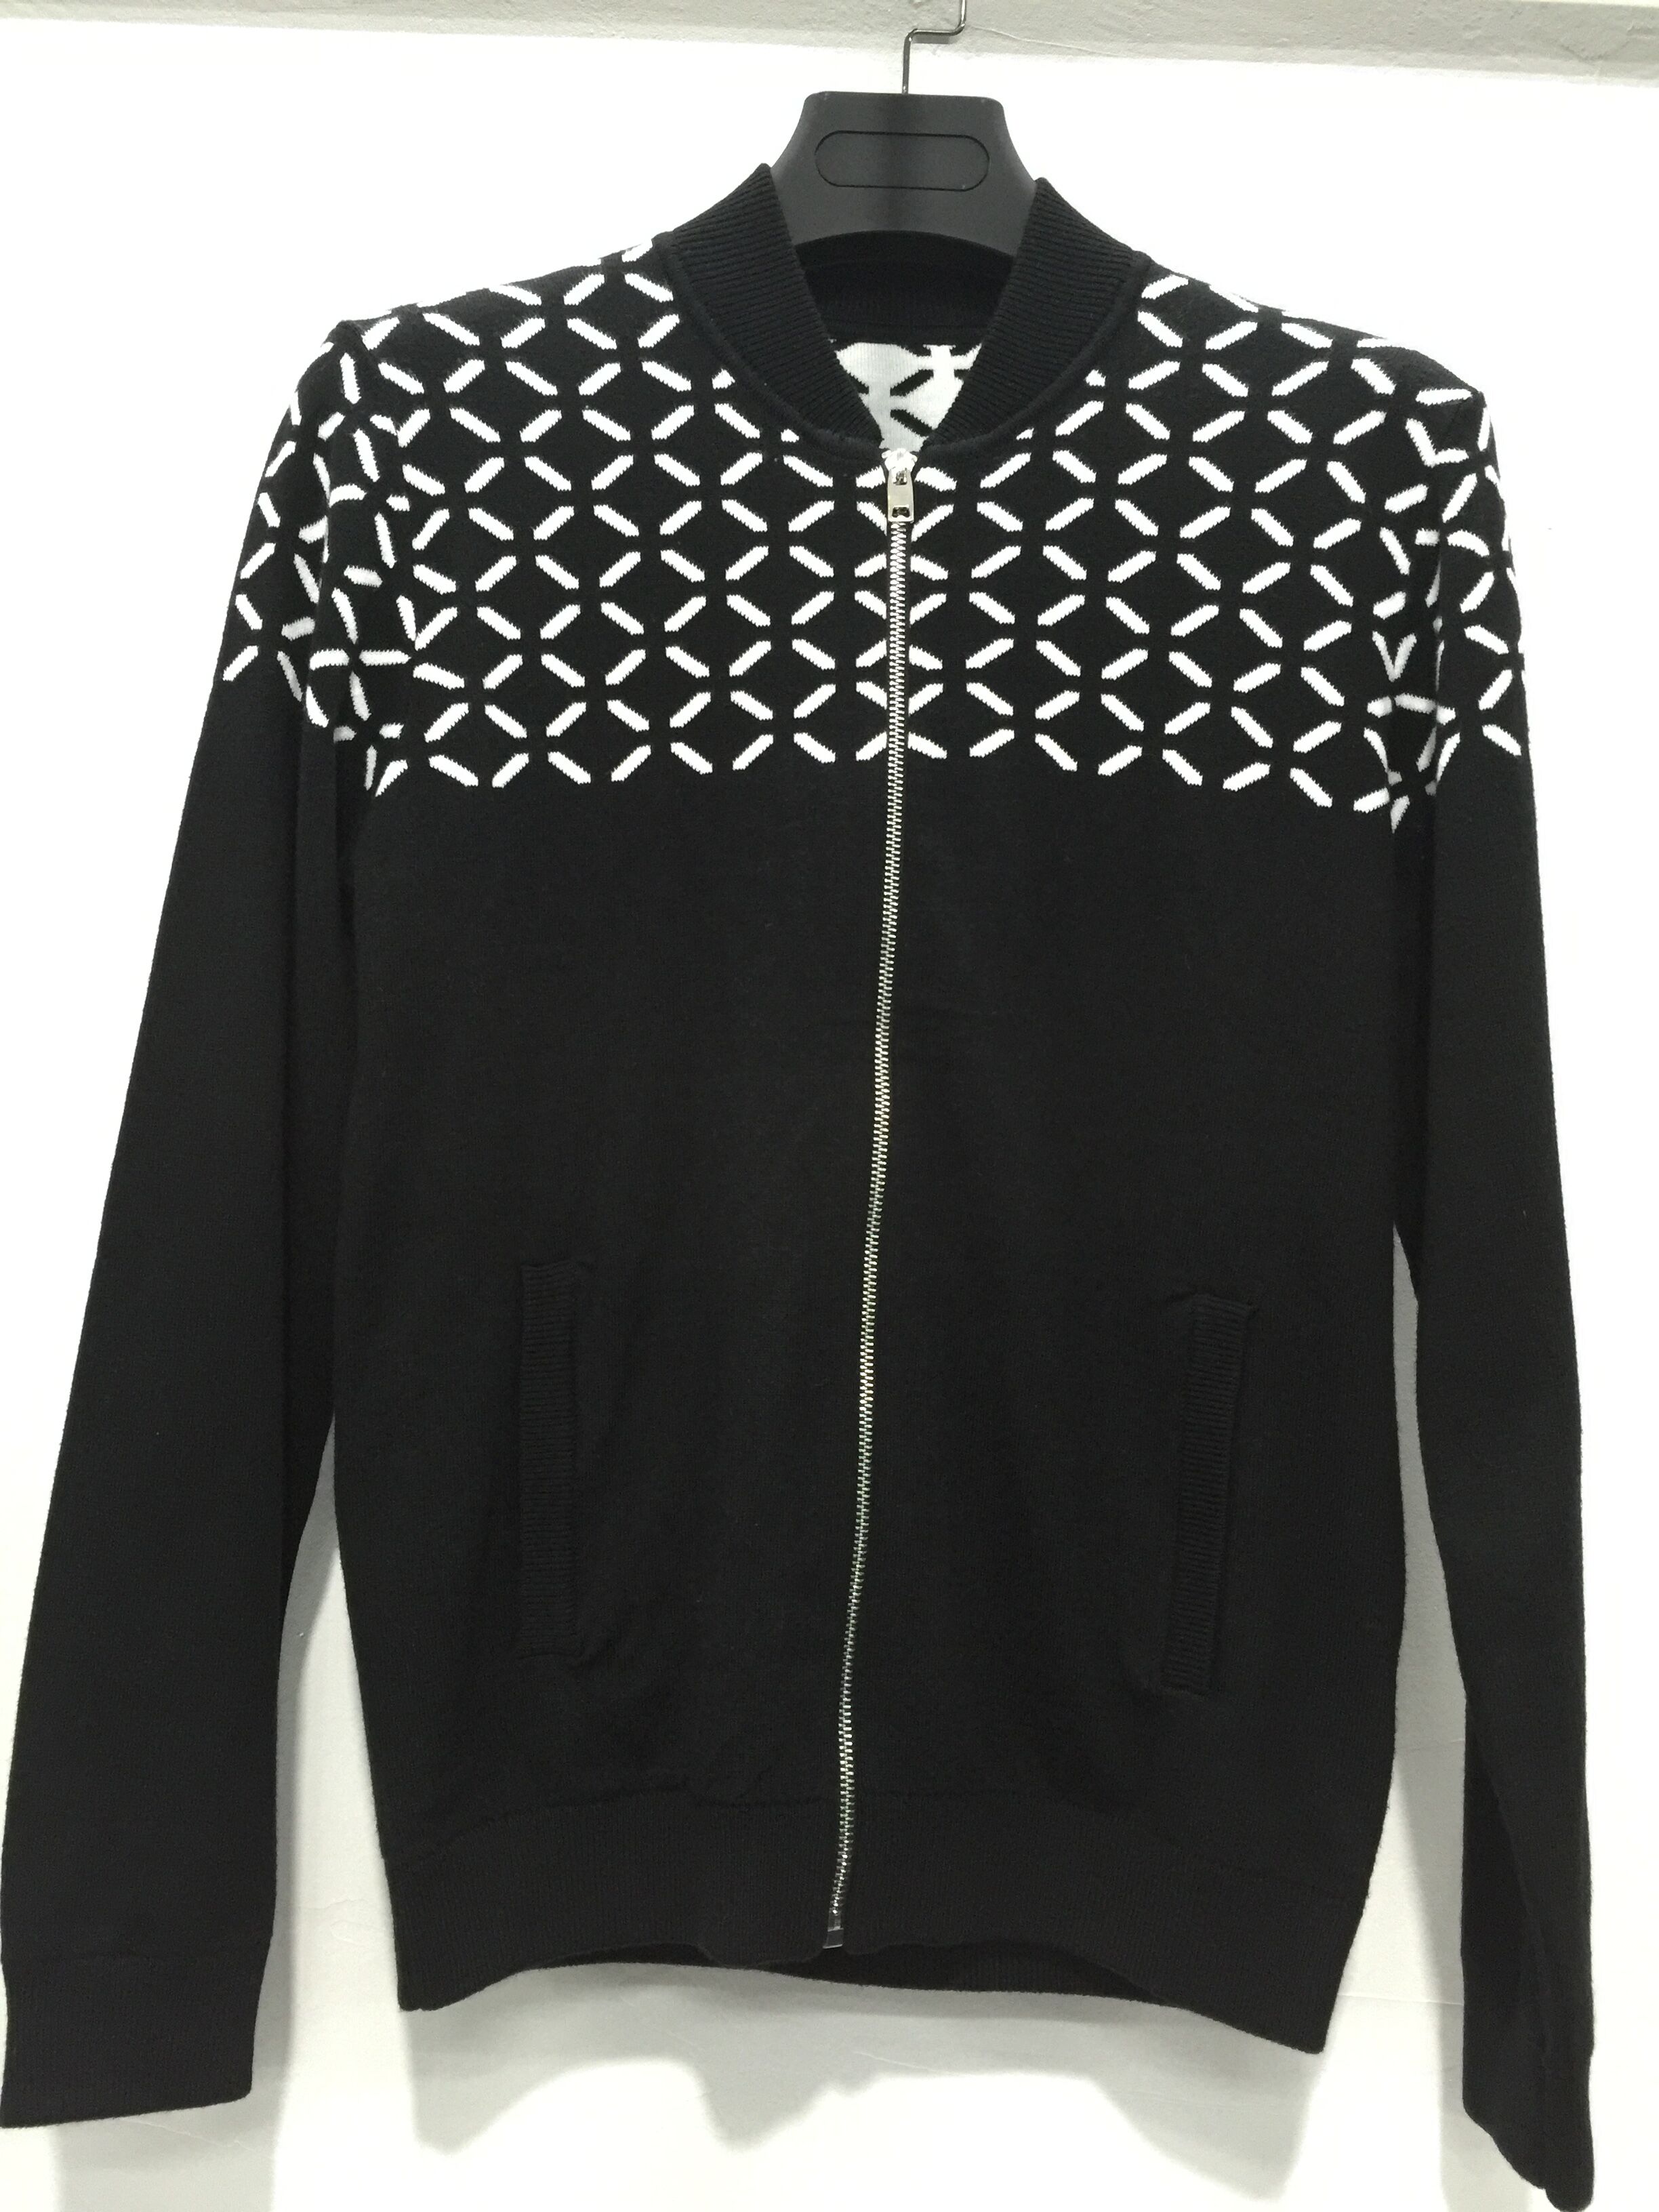 High quality mens jacquard pattern black winter cardigan sweater